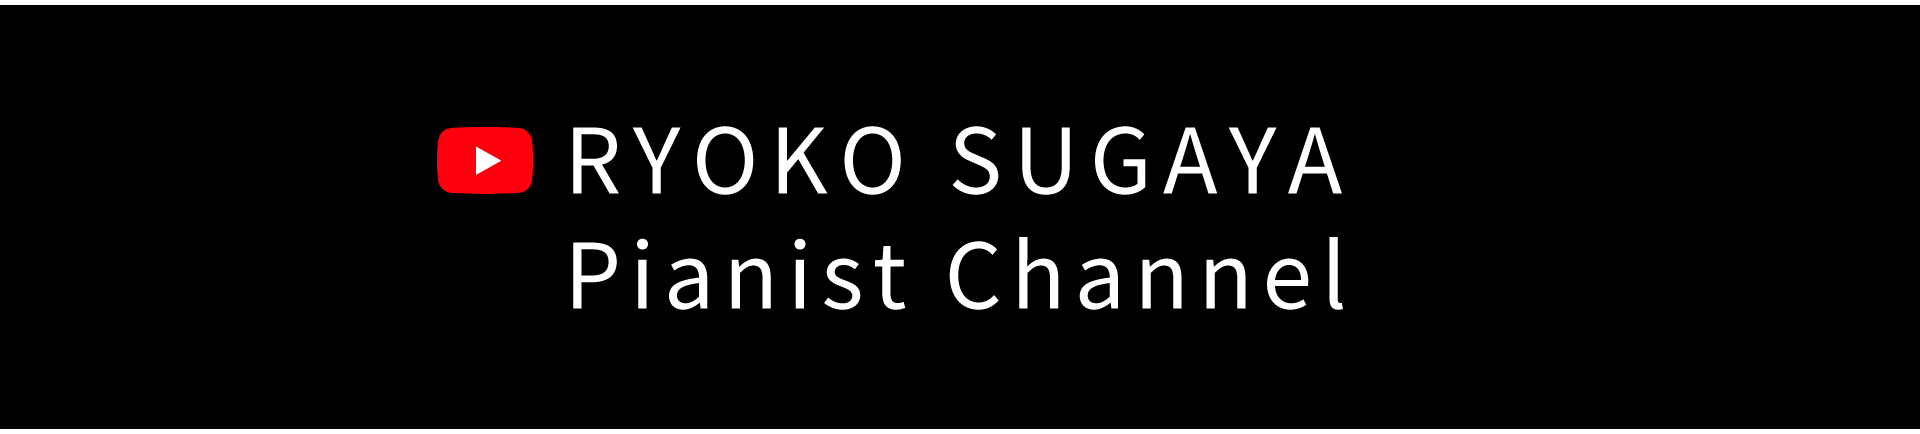 RYOKO SUGAYA Pianist Channel